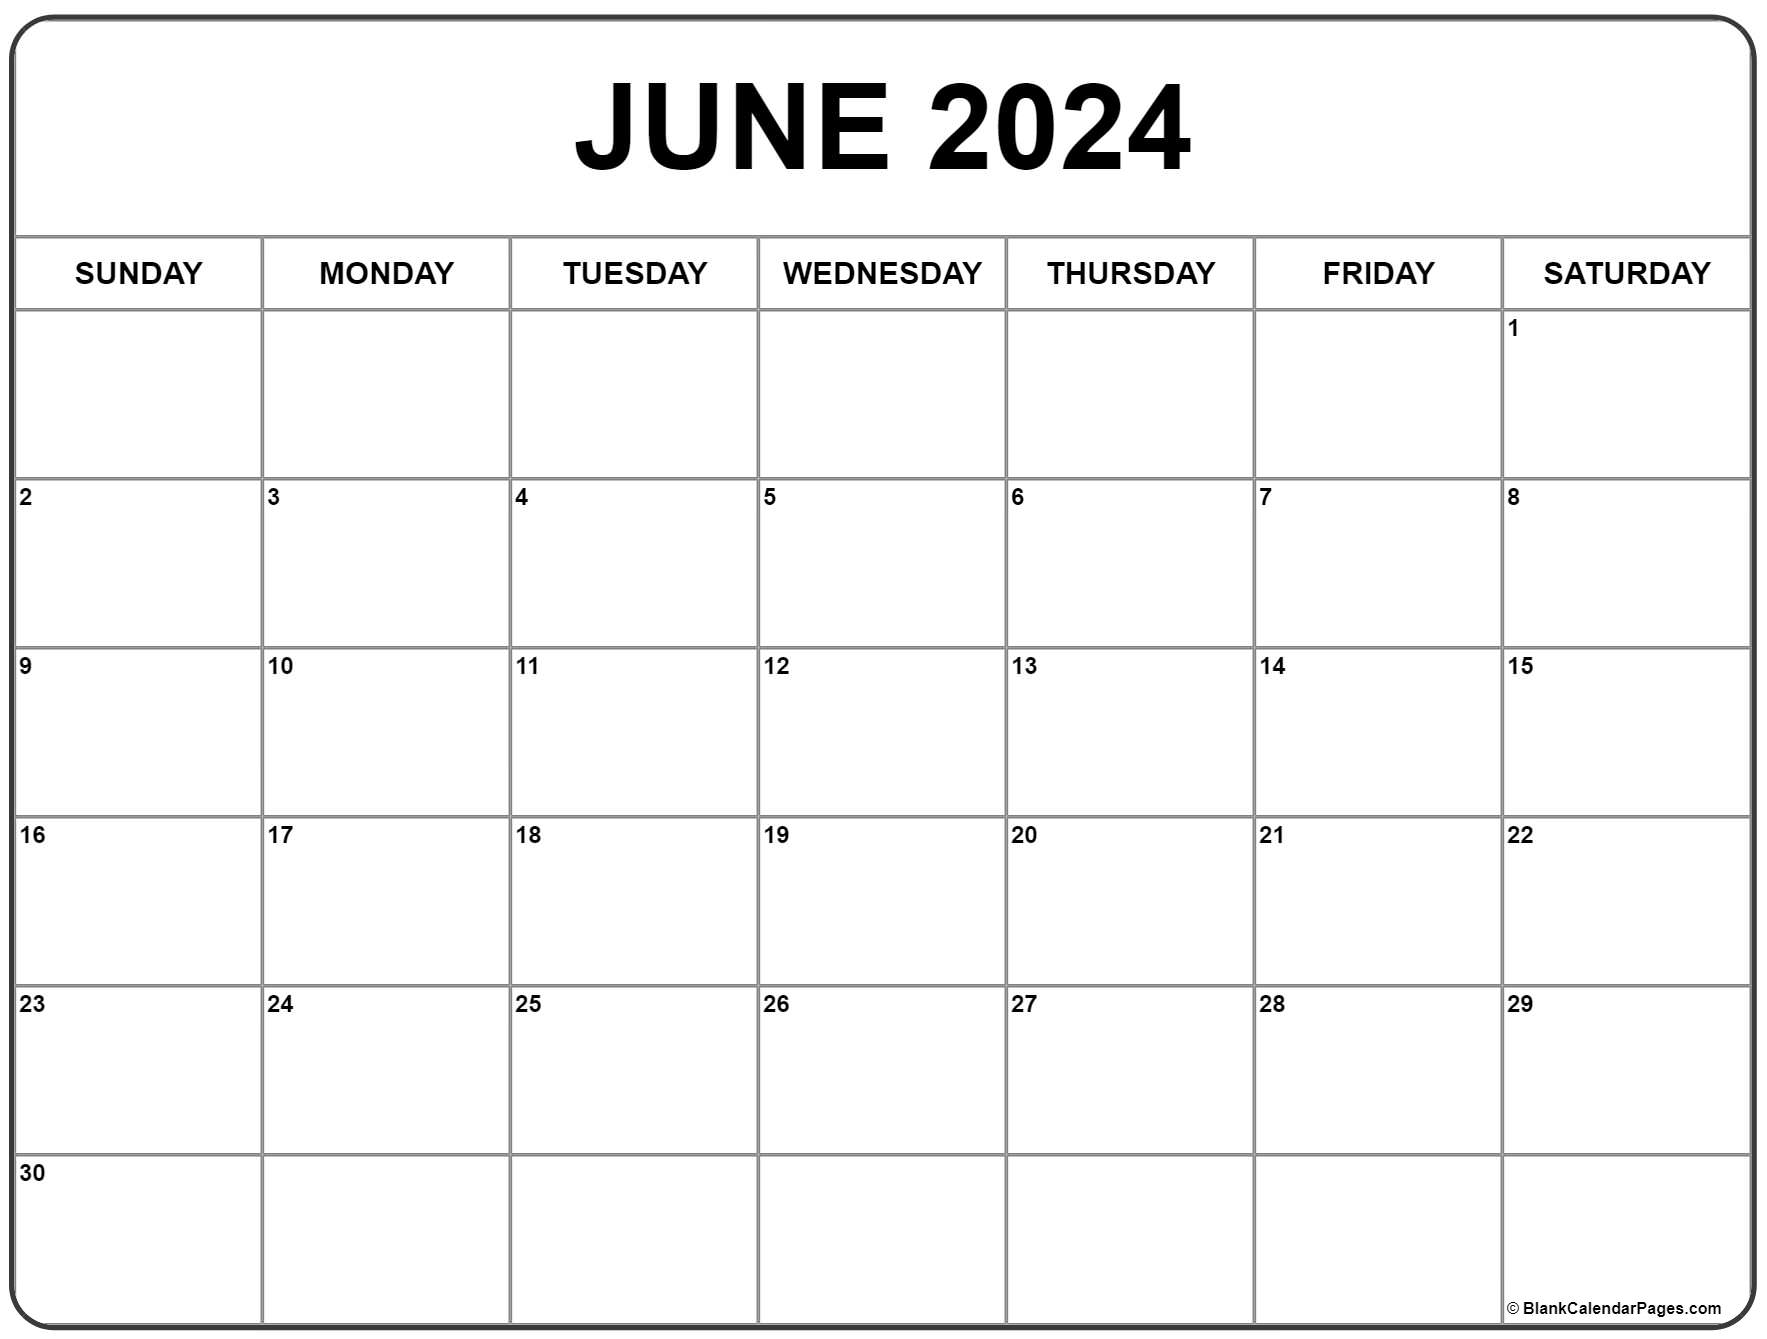 June 2024 Calendar | Free Printable Calendar for Printable June Calendar 2024